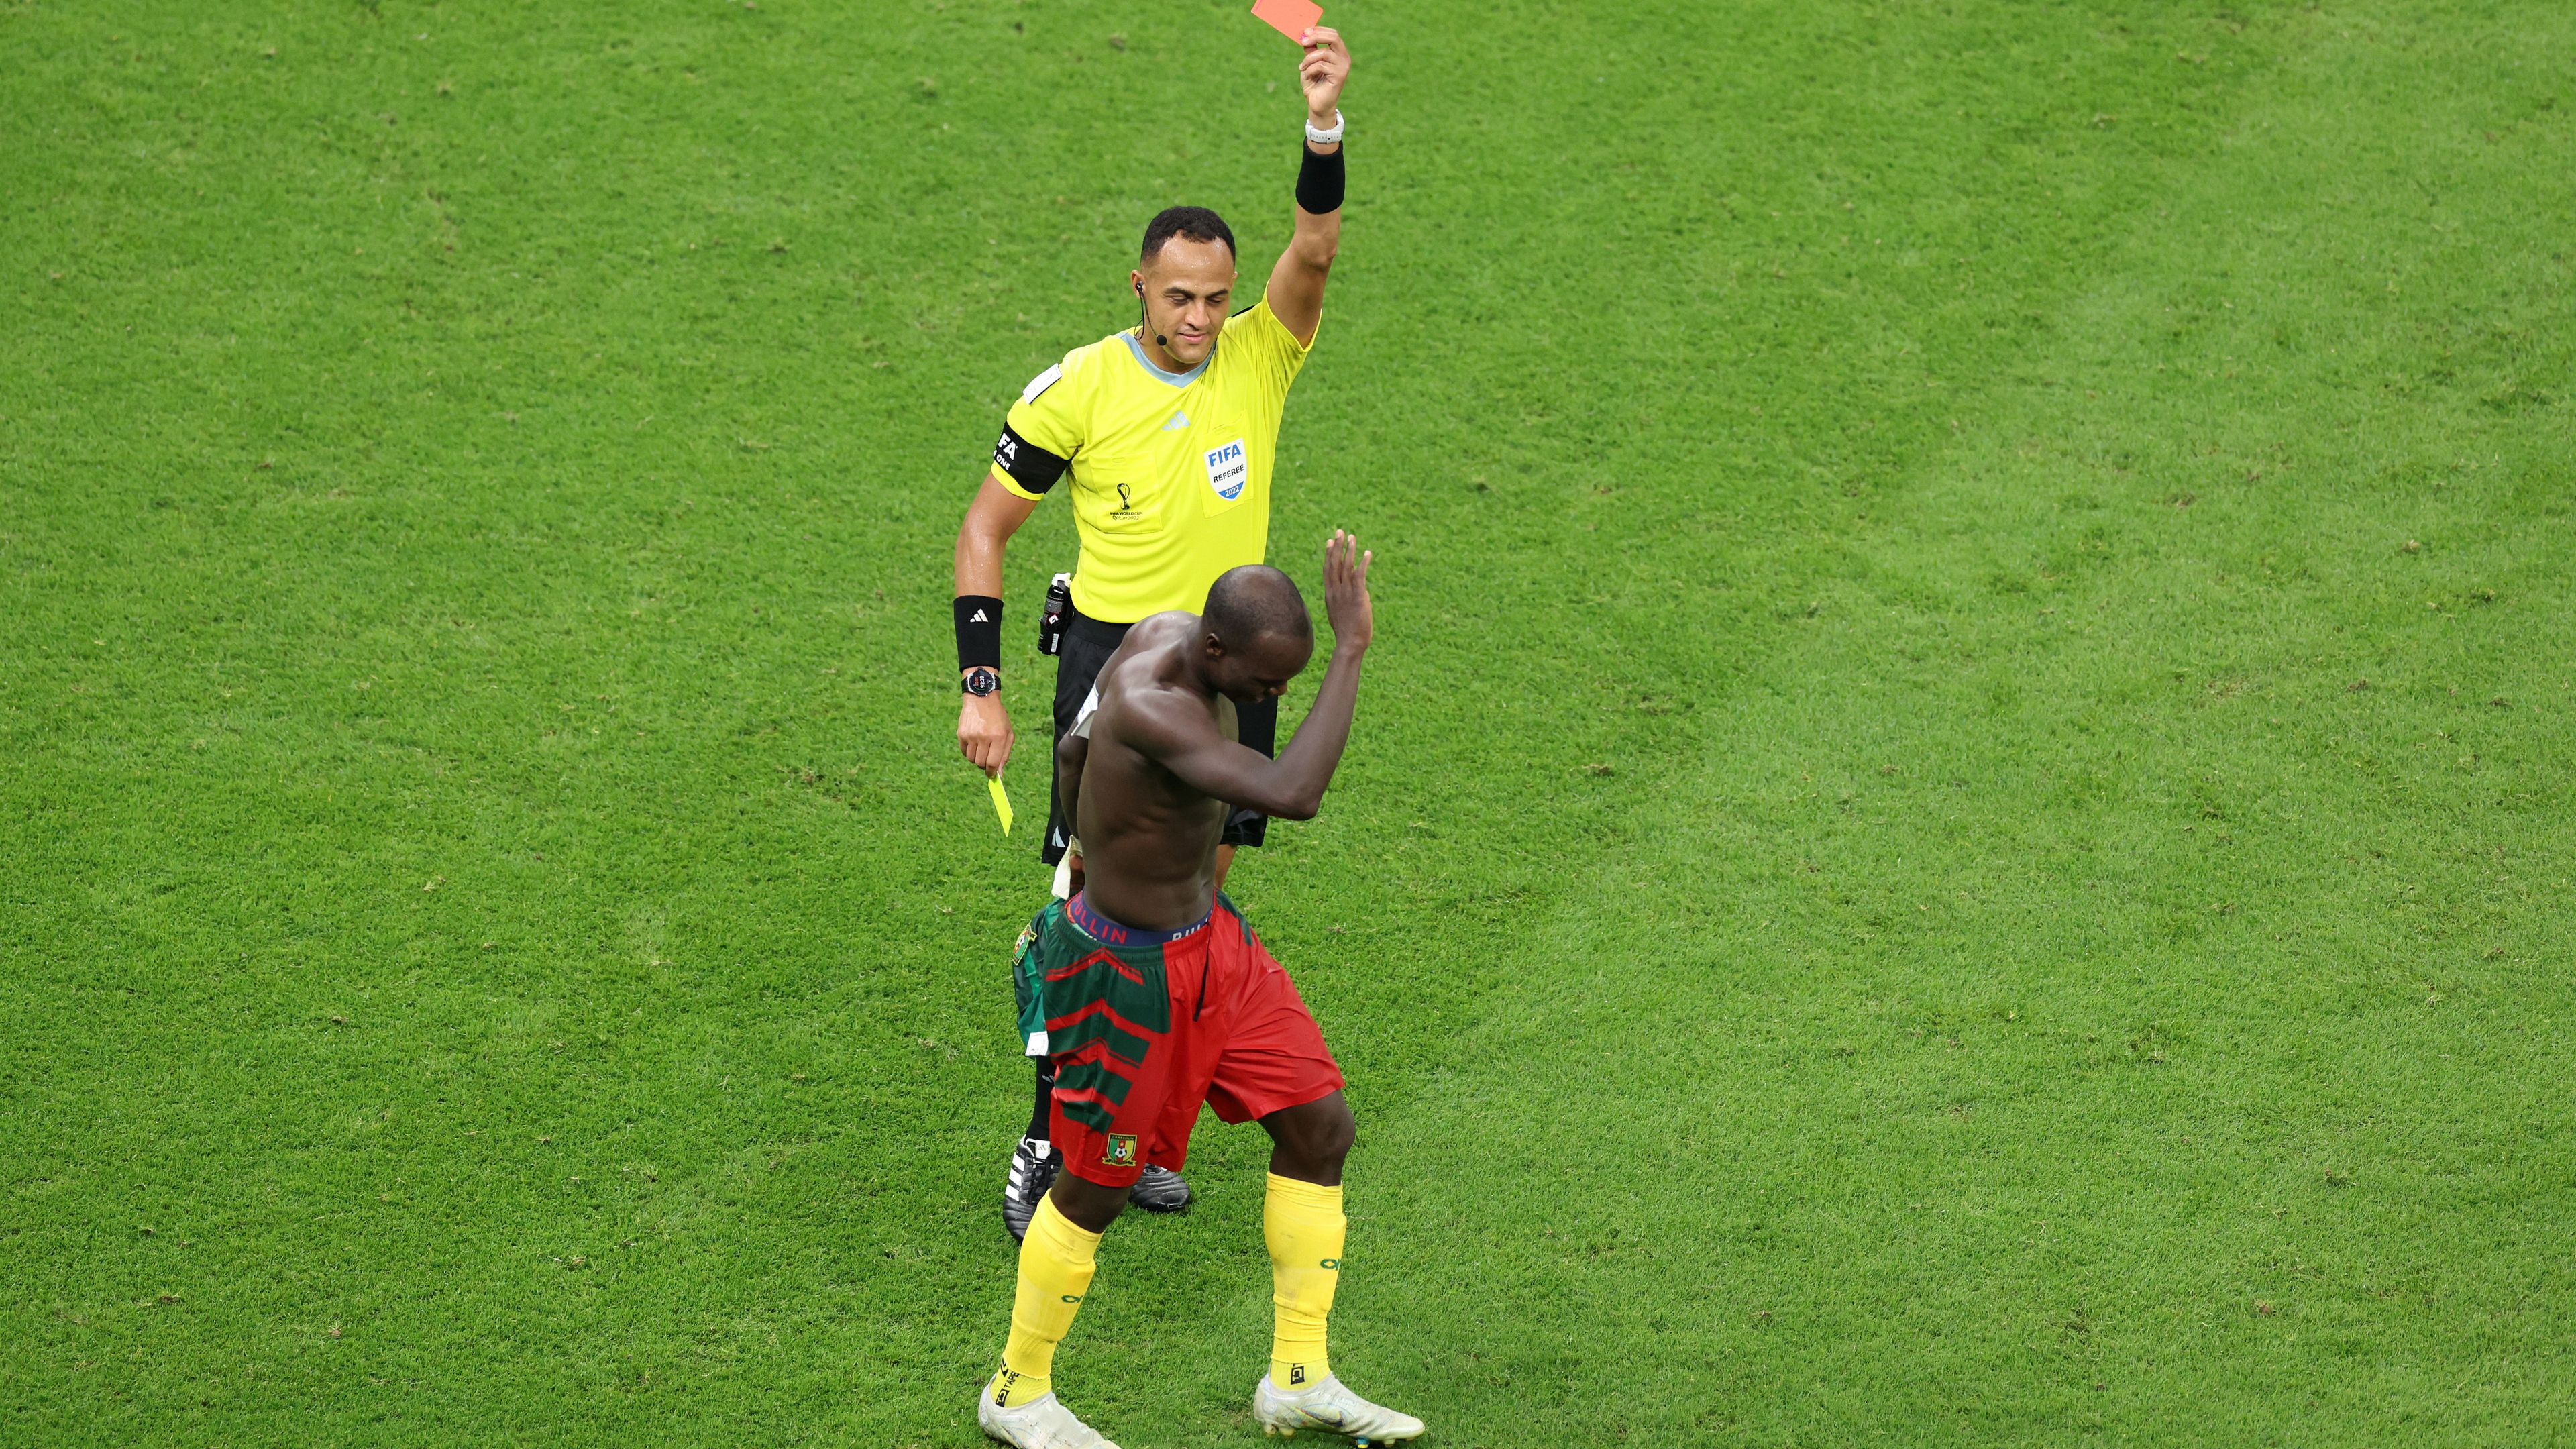 Cameroon striker Vincent Aboubakar sent off after taking his shirt off in celebration of winning goal